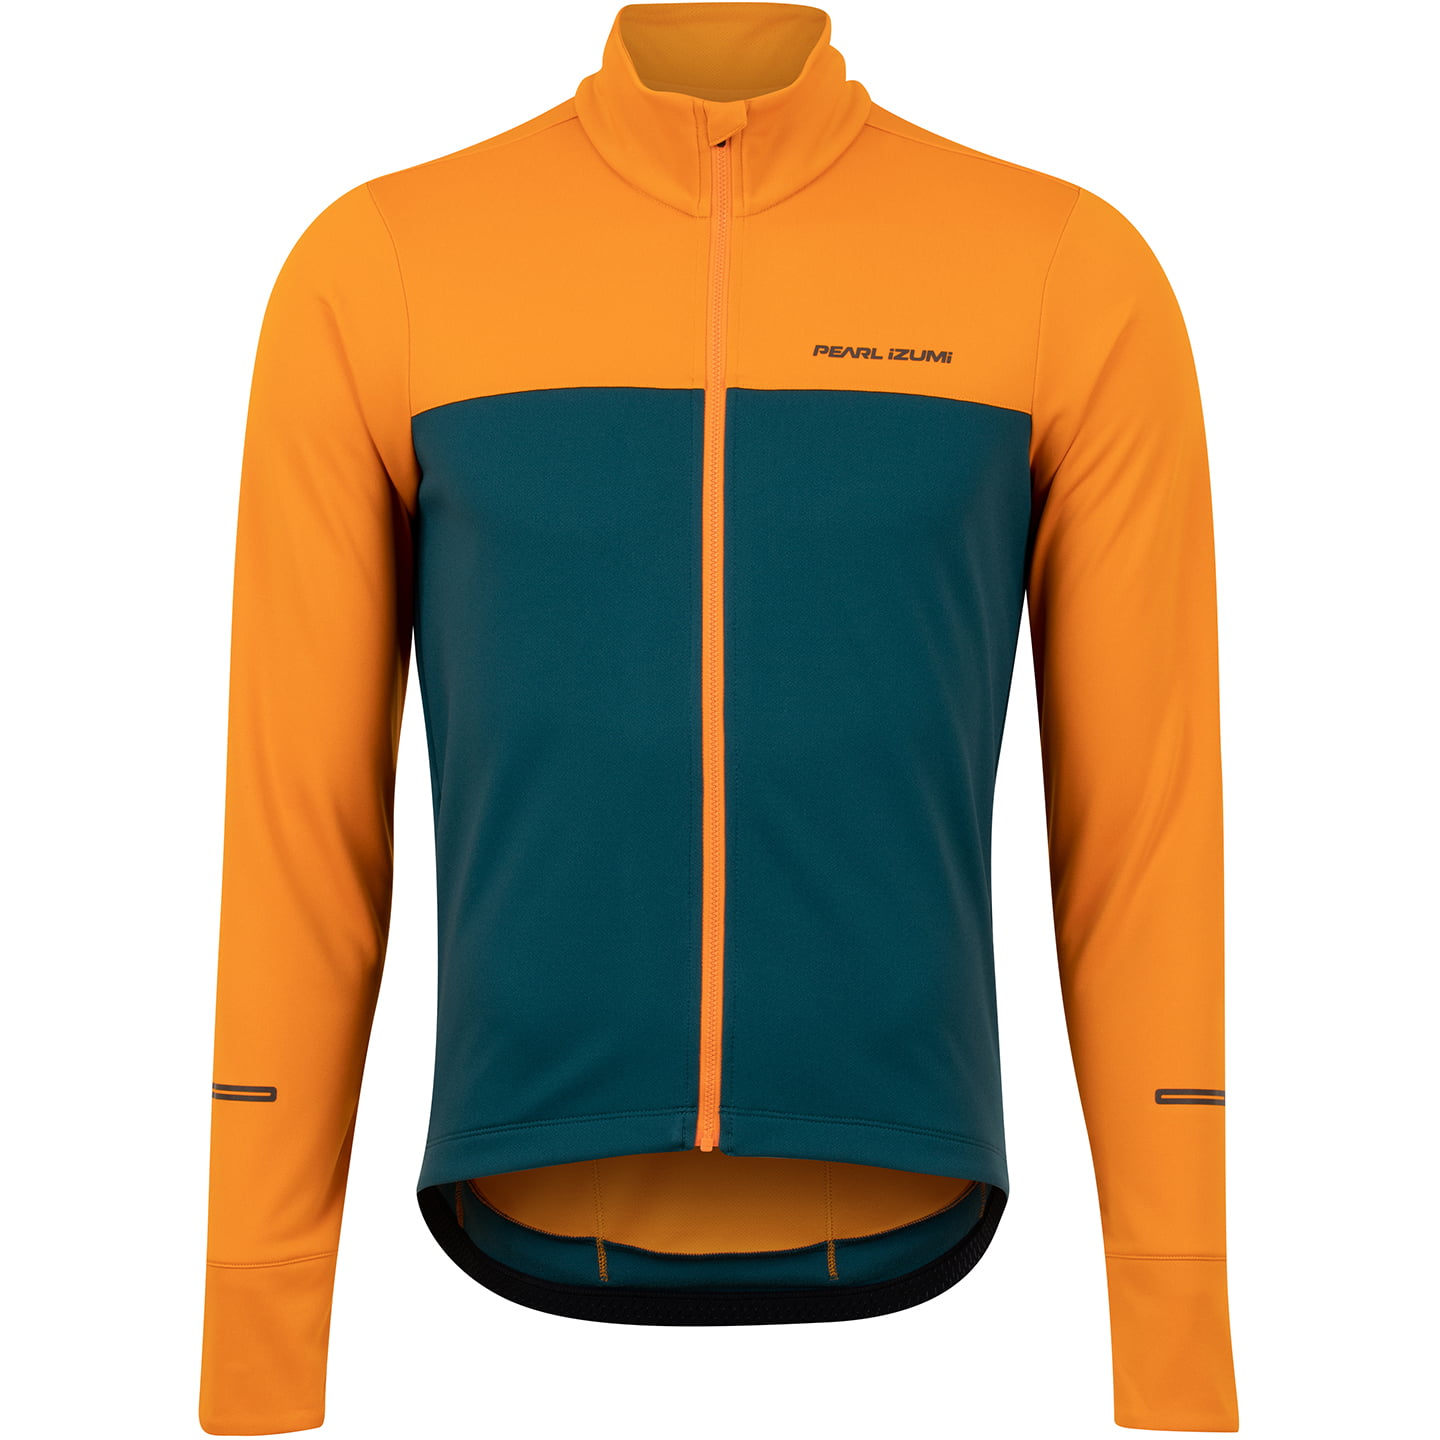 PEARL IZUMI Quest Long Sleeve Jersey Long Sleeve Jersey, for men, size M, Cycling jersey, Cycling clothing